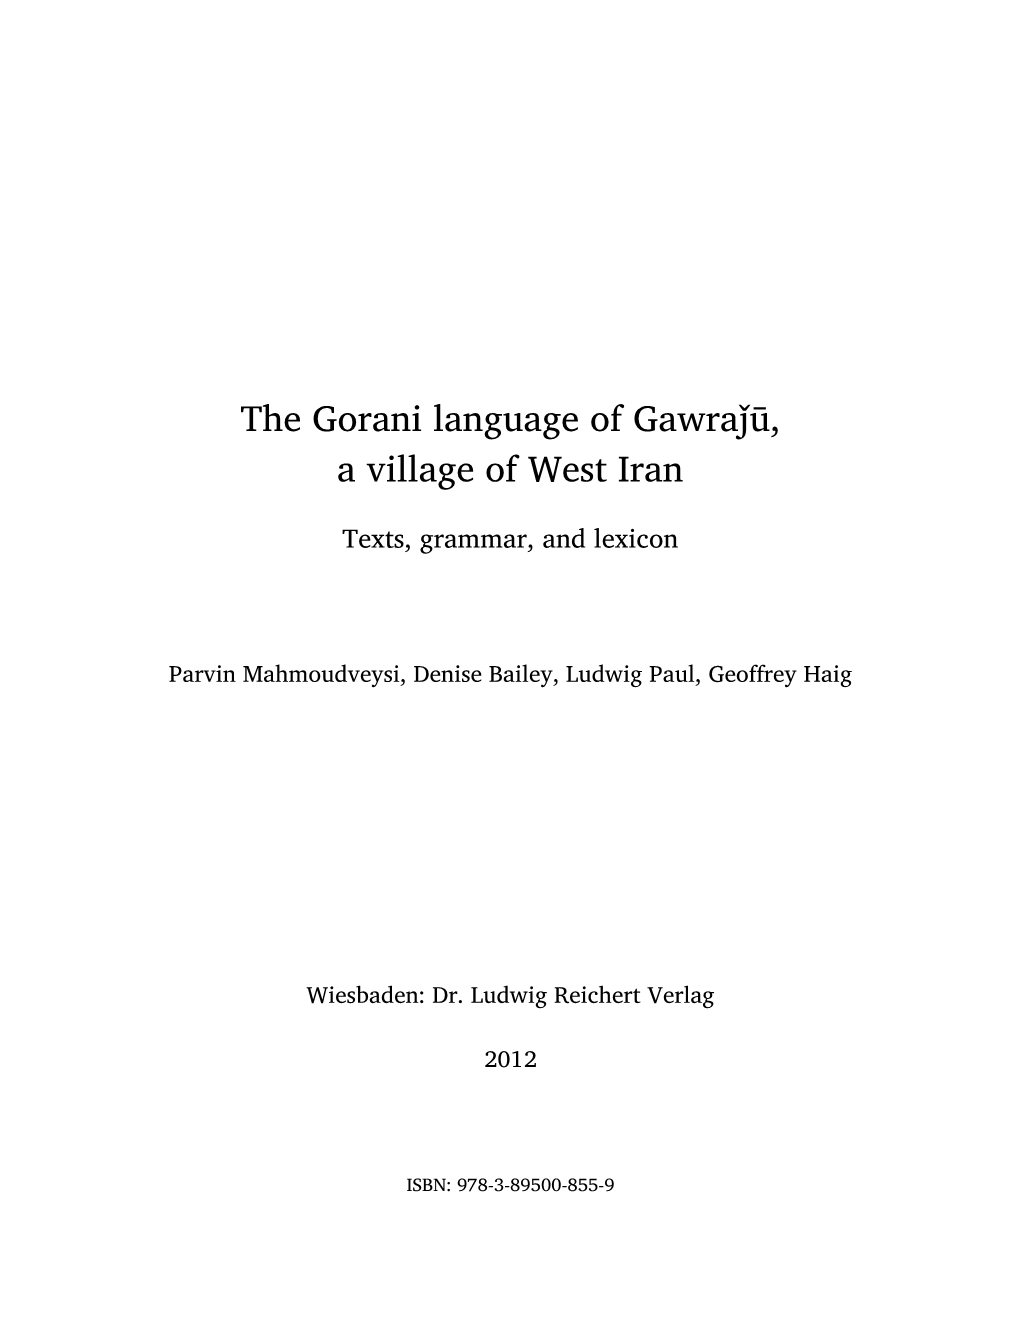 The Gorani Language of Gawraǰū, a Village of West Iran